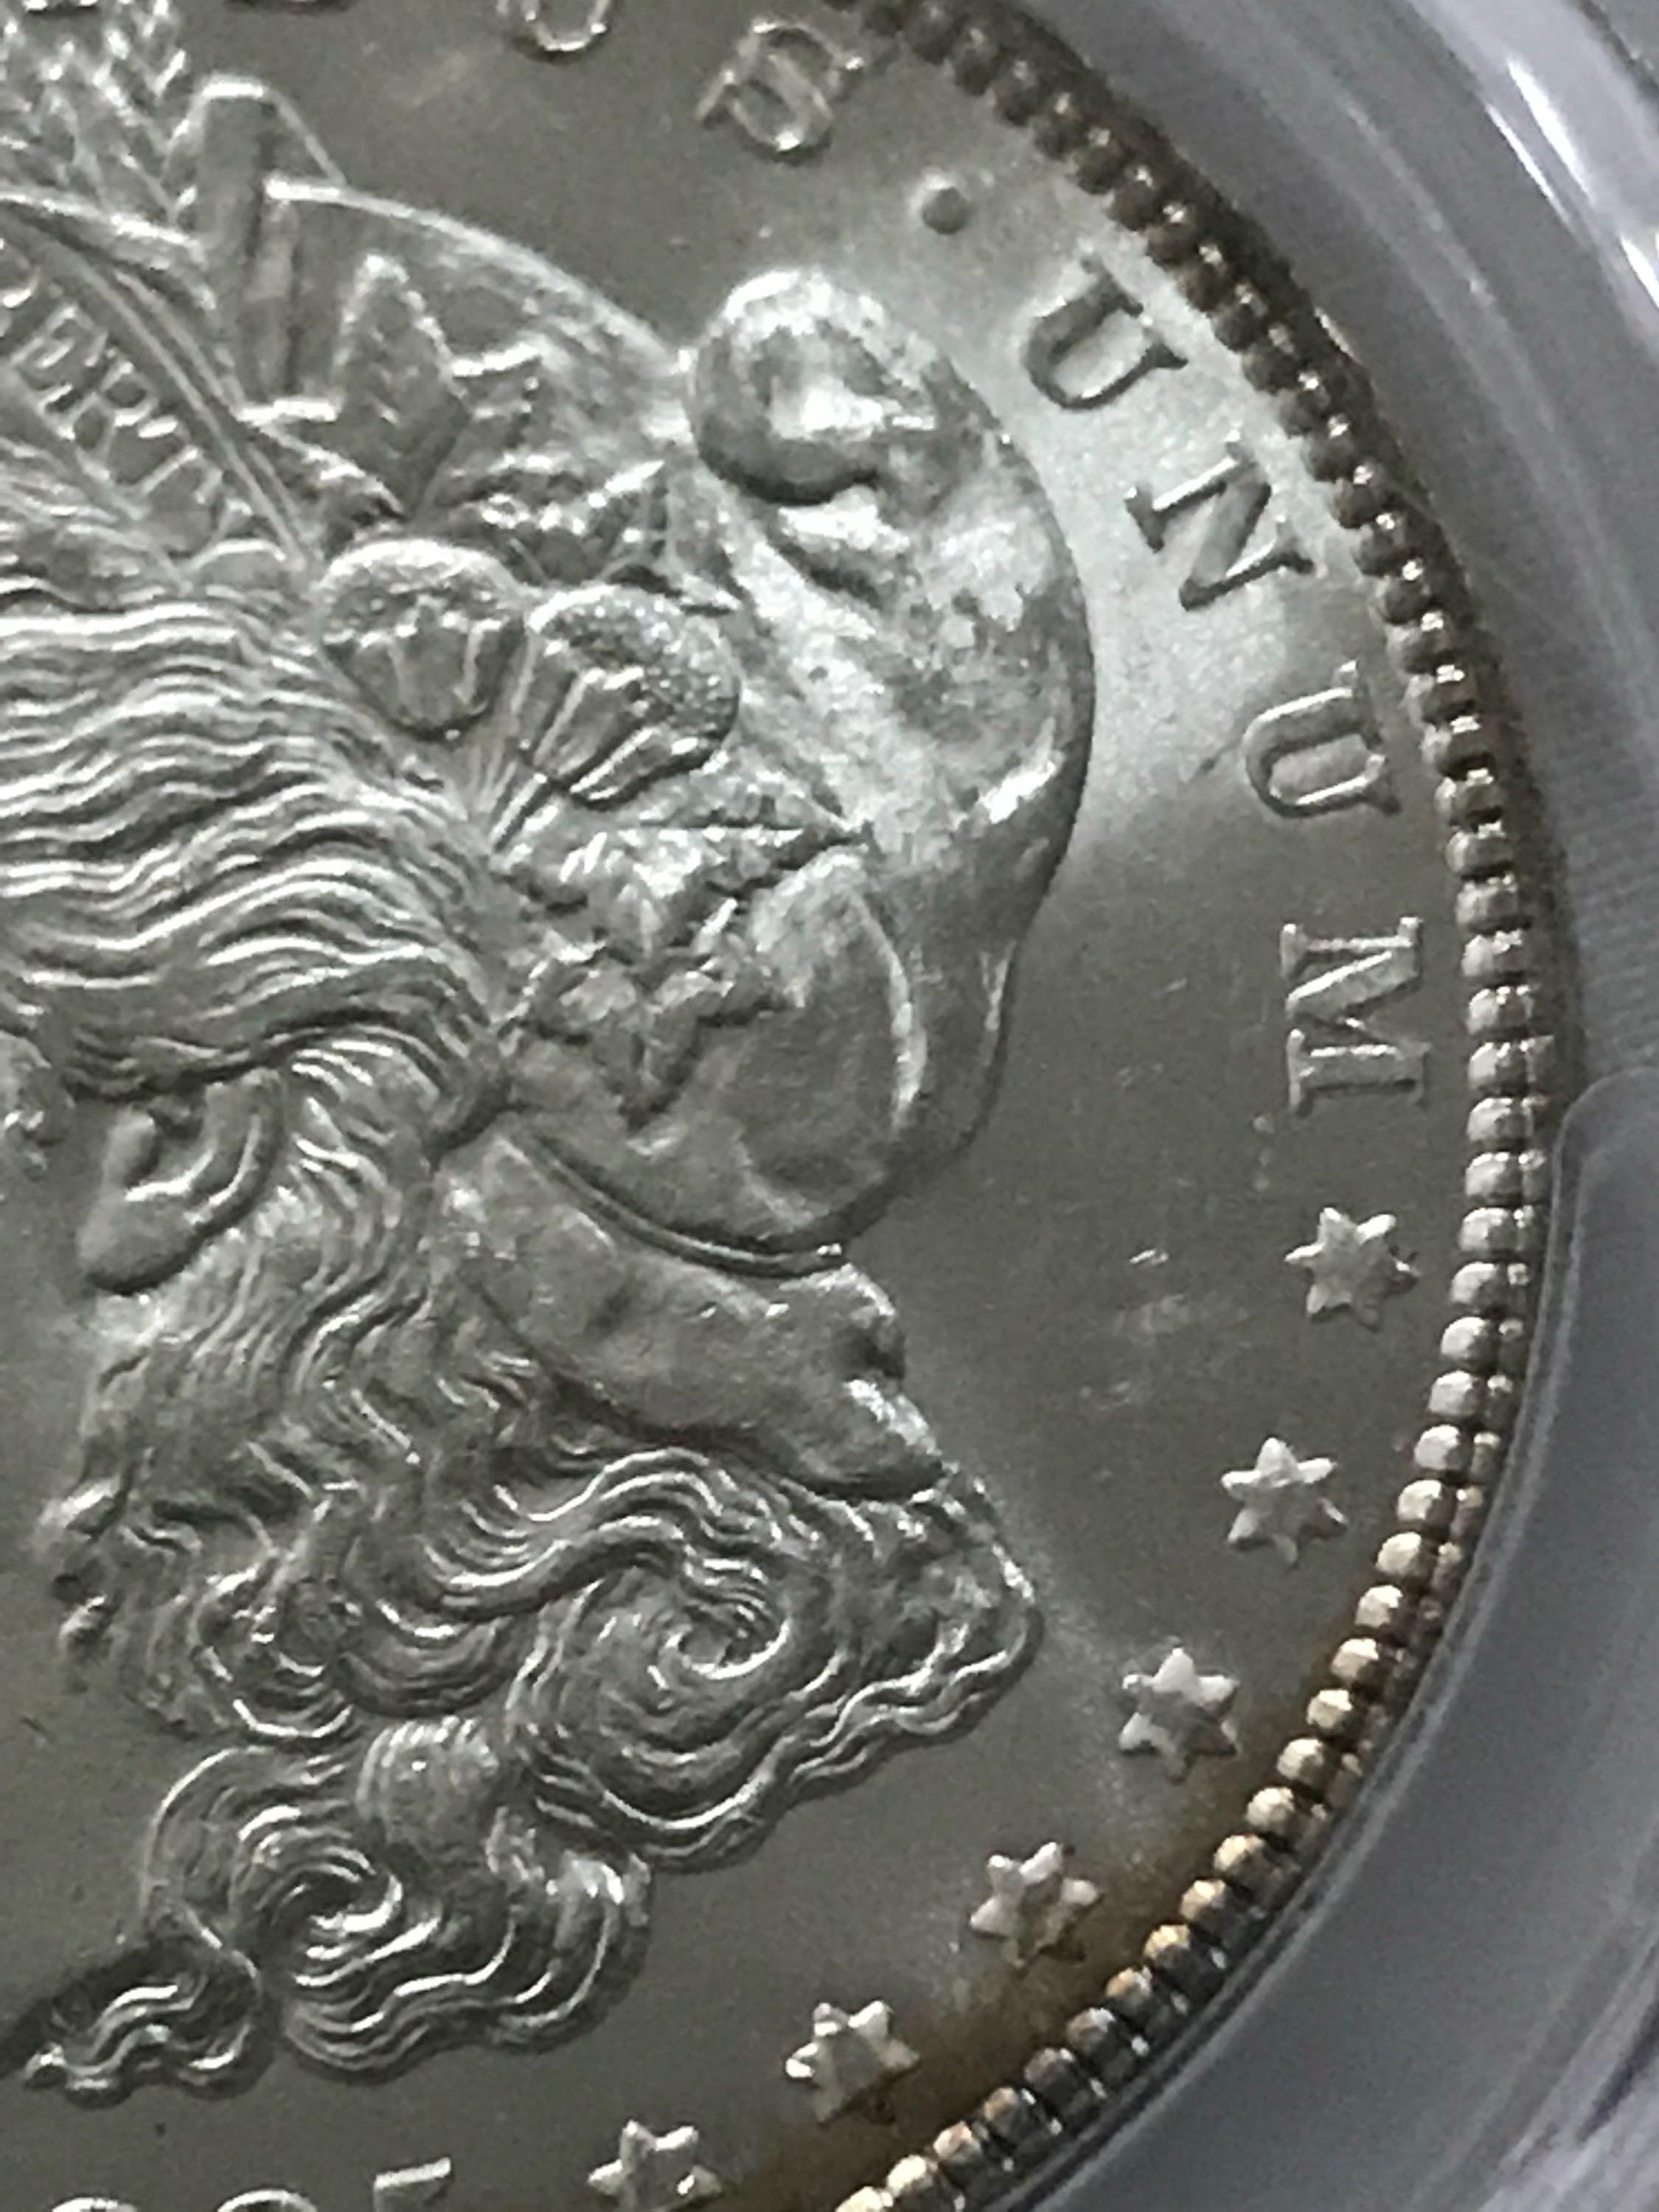 1885 Morgan Silver Dollar MS-63